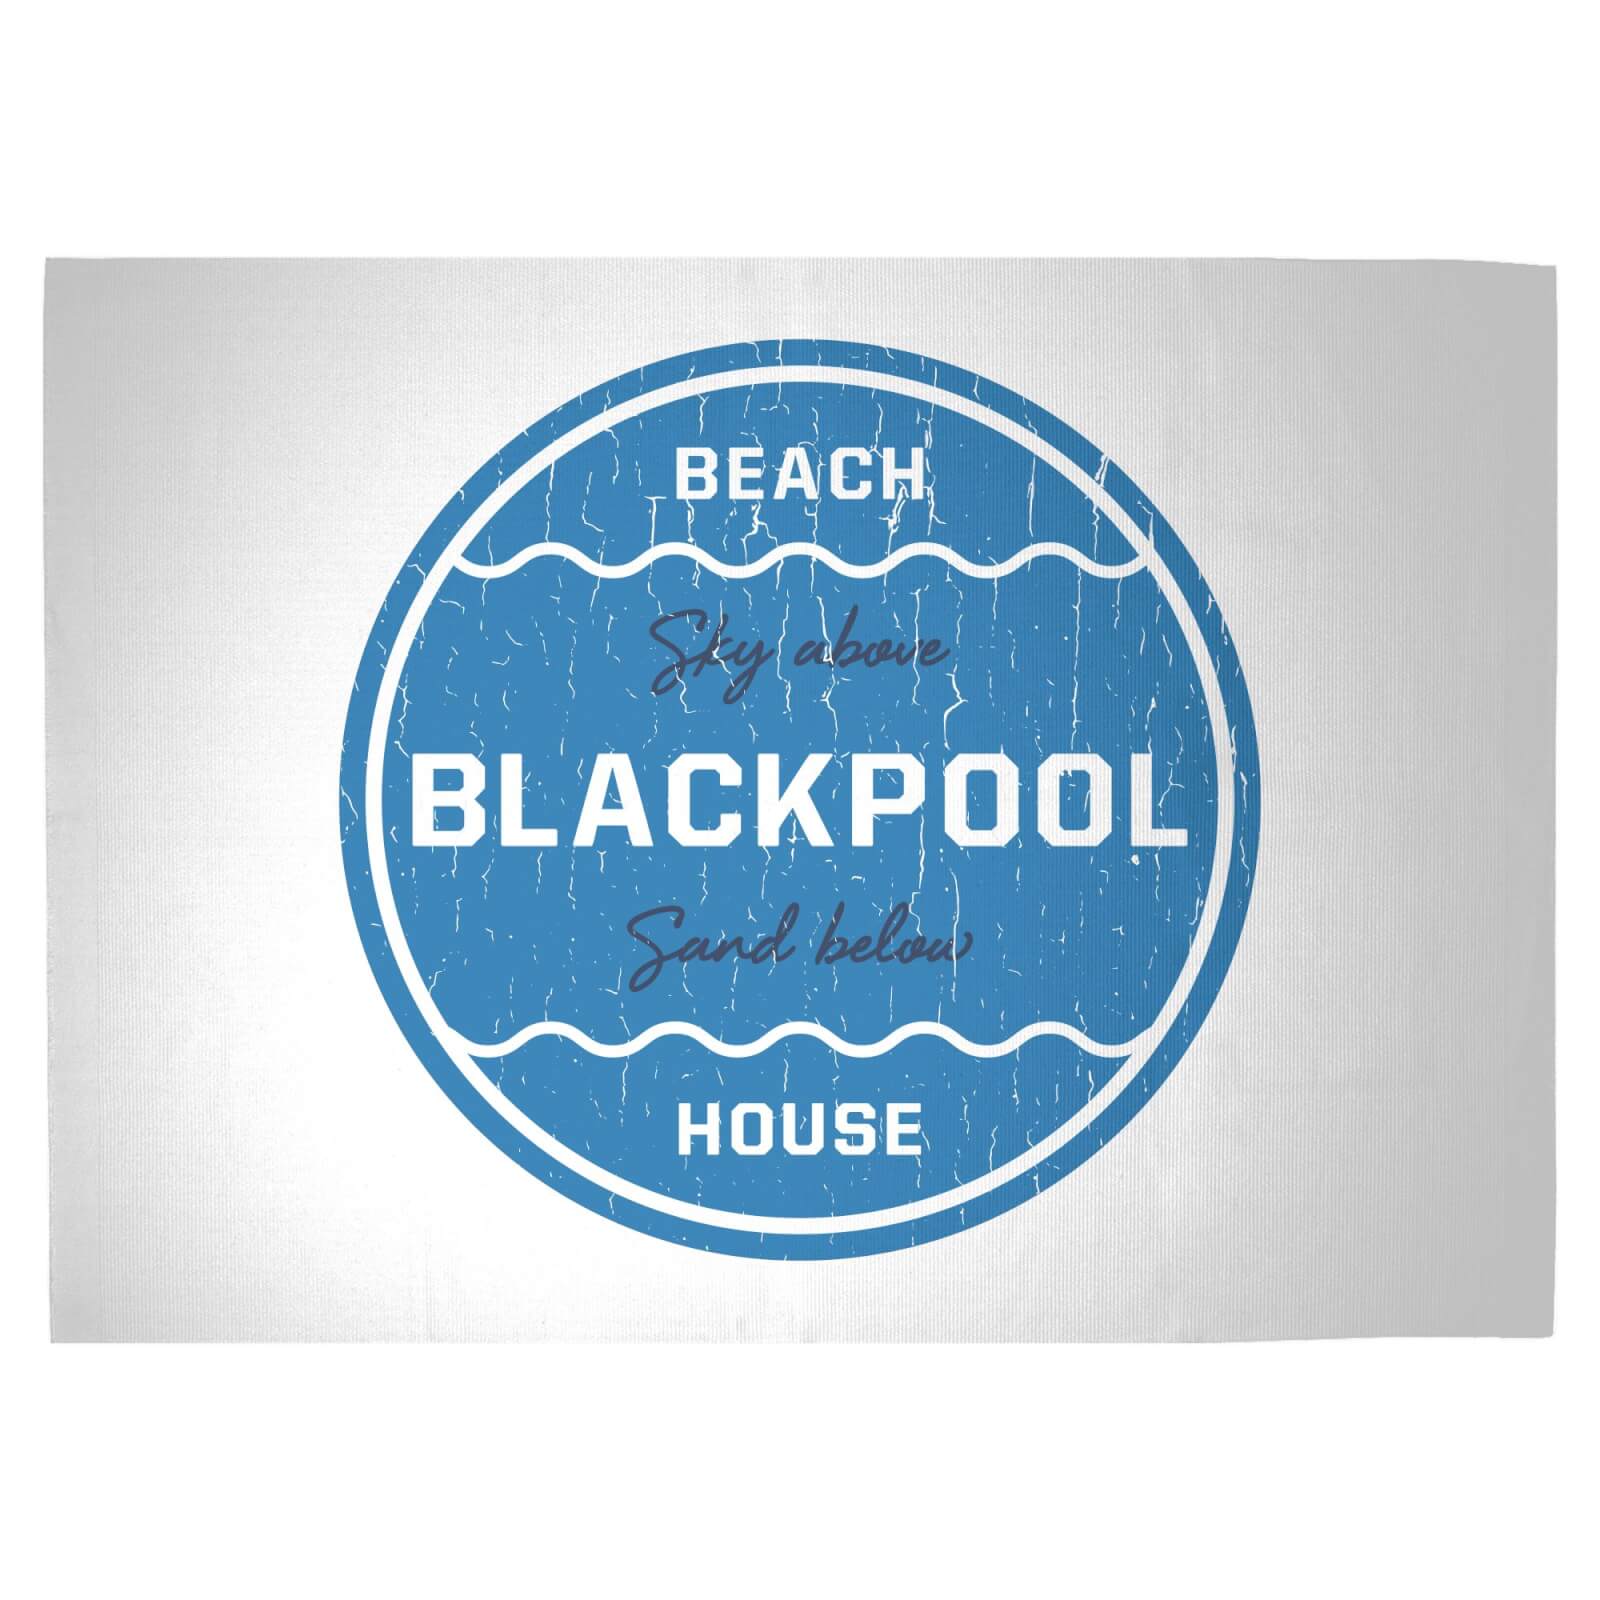 Blackpool Beach Badge Woven Rug - Large